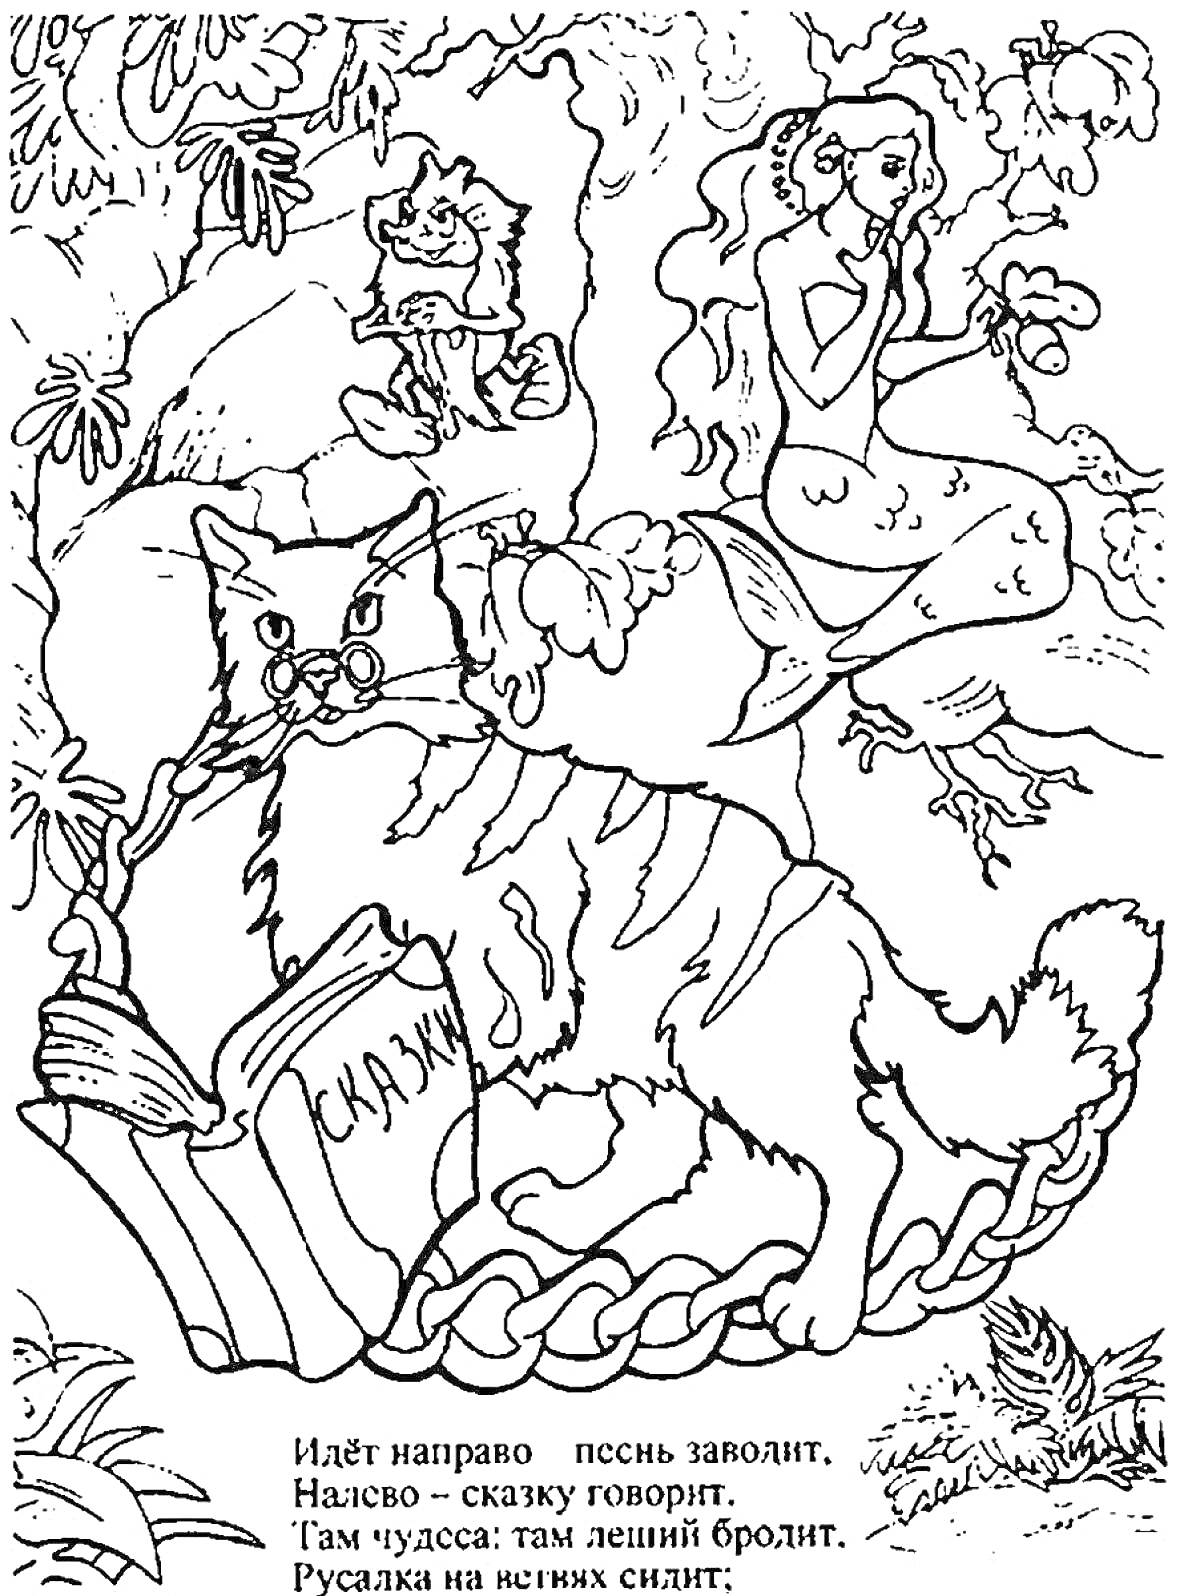 Раскраска Русалка на ветвях, кот у дуба с книгой, цепь на дубе, стихи Пушкина